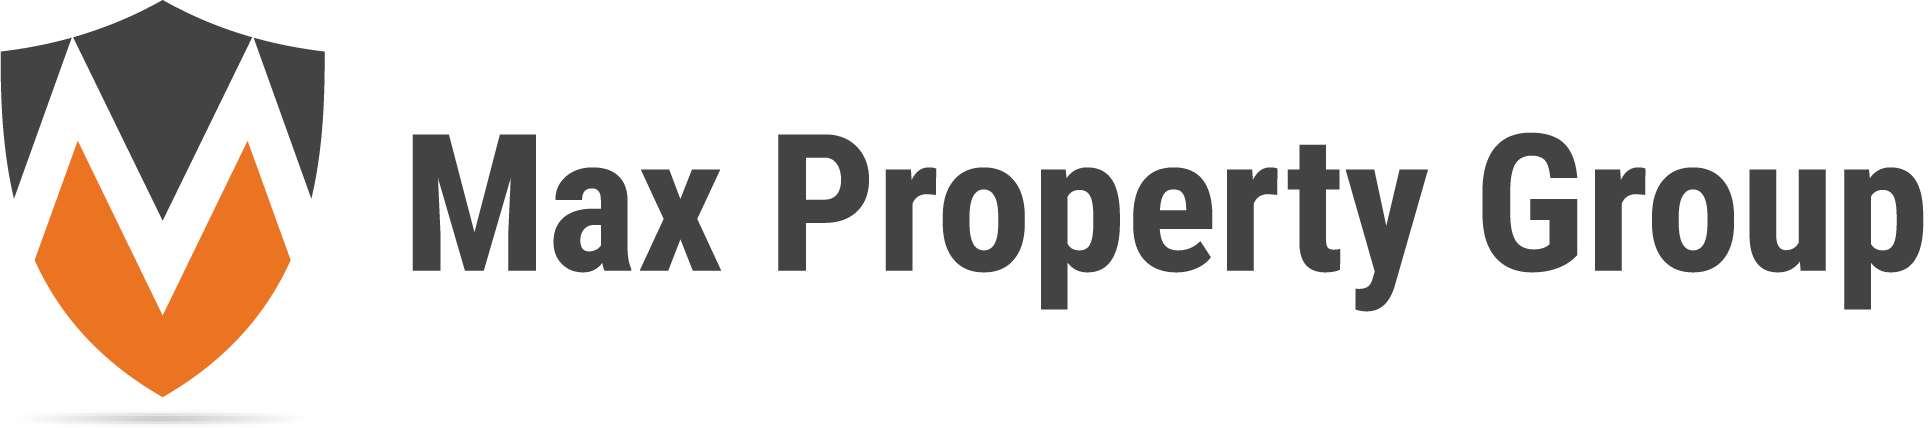 max property group logo